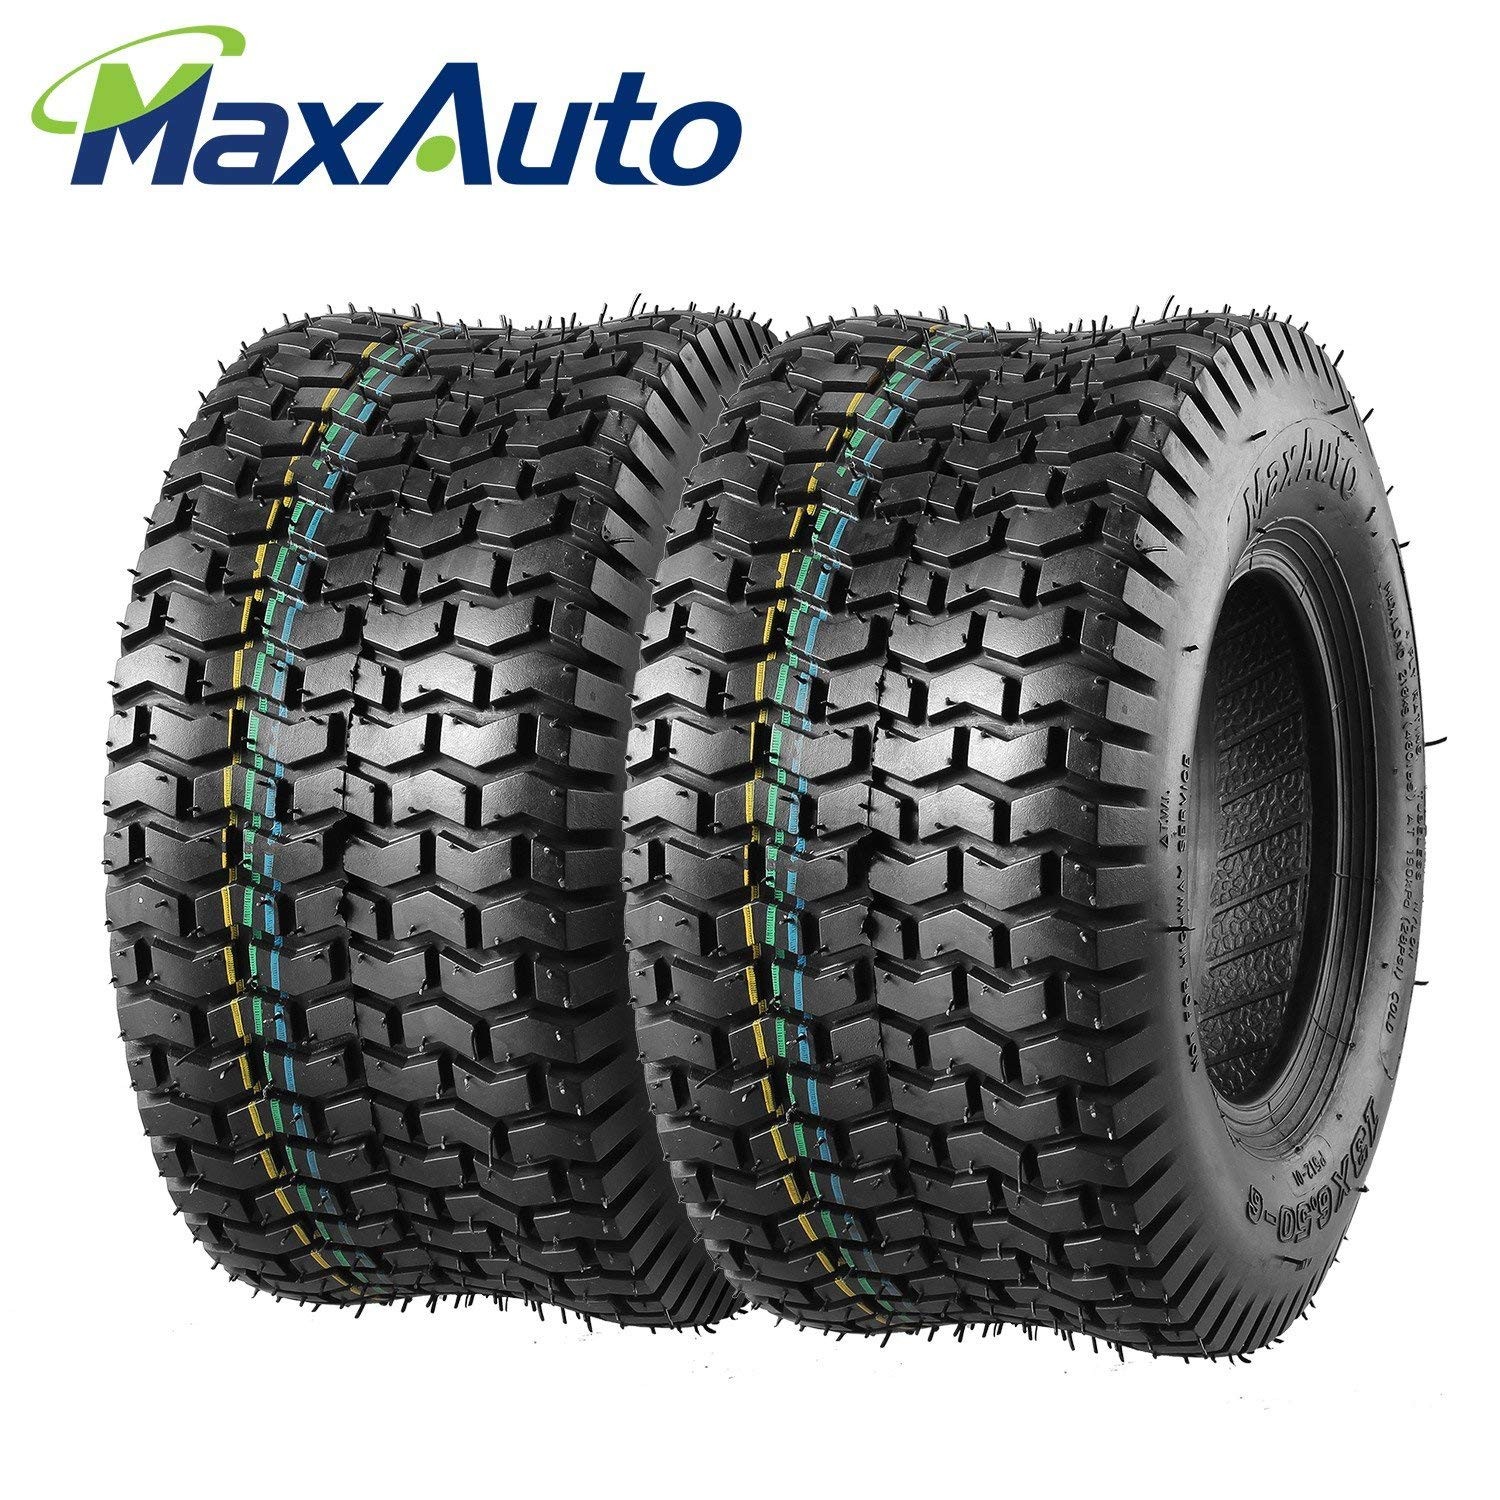 Car Tyre Rotation Diagram Amazon Maxauto Golf Cart Tires 22×11 12 22 11 12 22x11x12 4ply Of Car Tyre Rotation Diagram